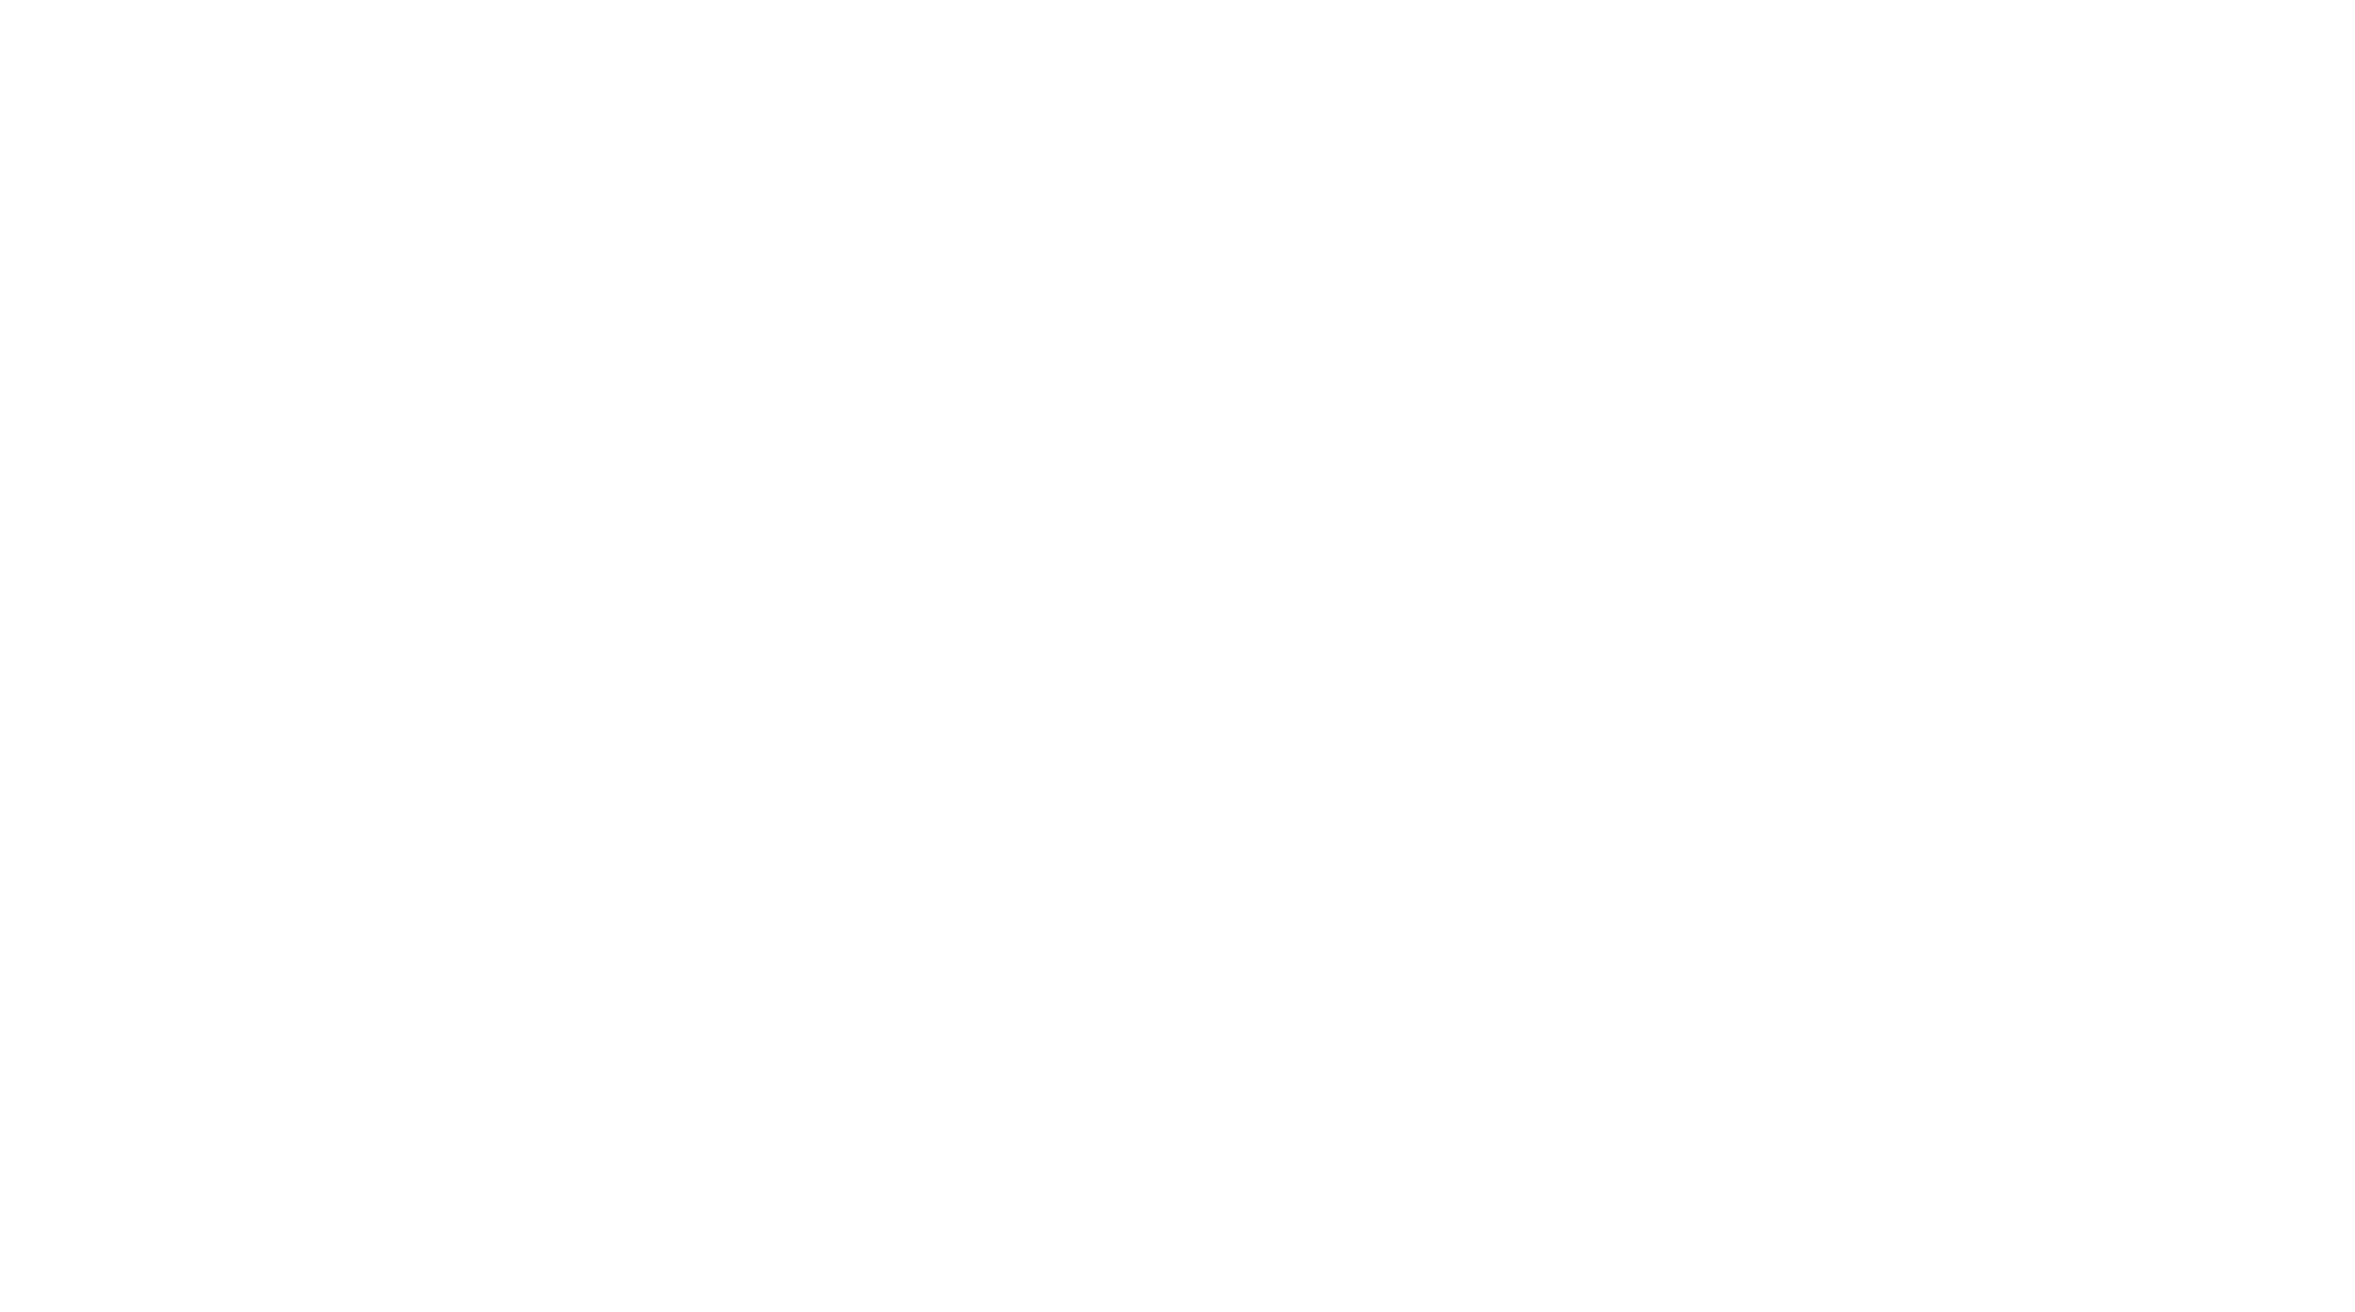 MVJV My happy kitchen salt and pepper grinder set